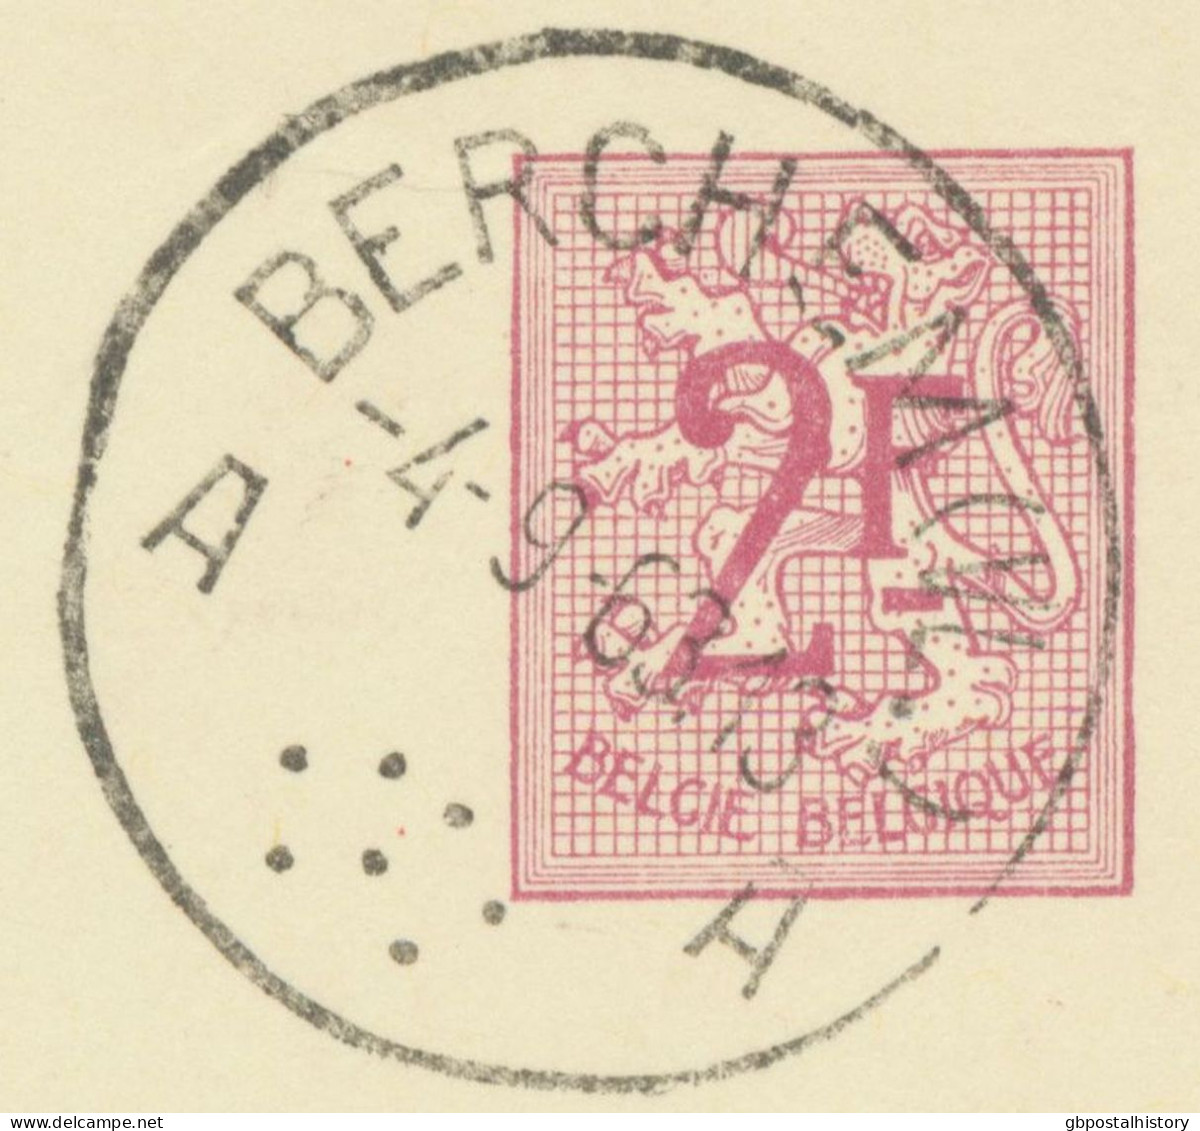 BELGIUM VILLAGE POSTMARKS  BERCHEM (VL.) A (now Kluisbergen) SC With Dots 1963 (Postal Stationery 2 F, PUBLIBEL 1940) - Matasellado Con Puntos